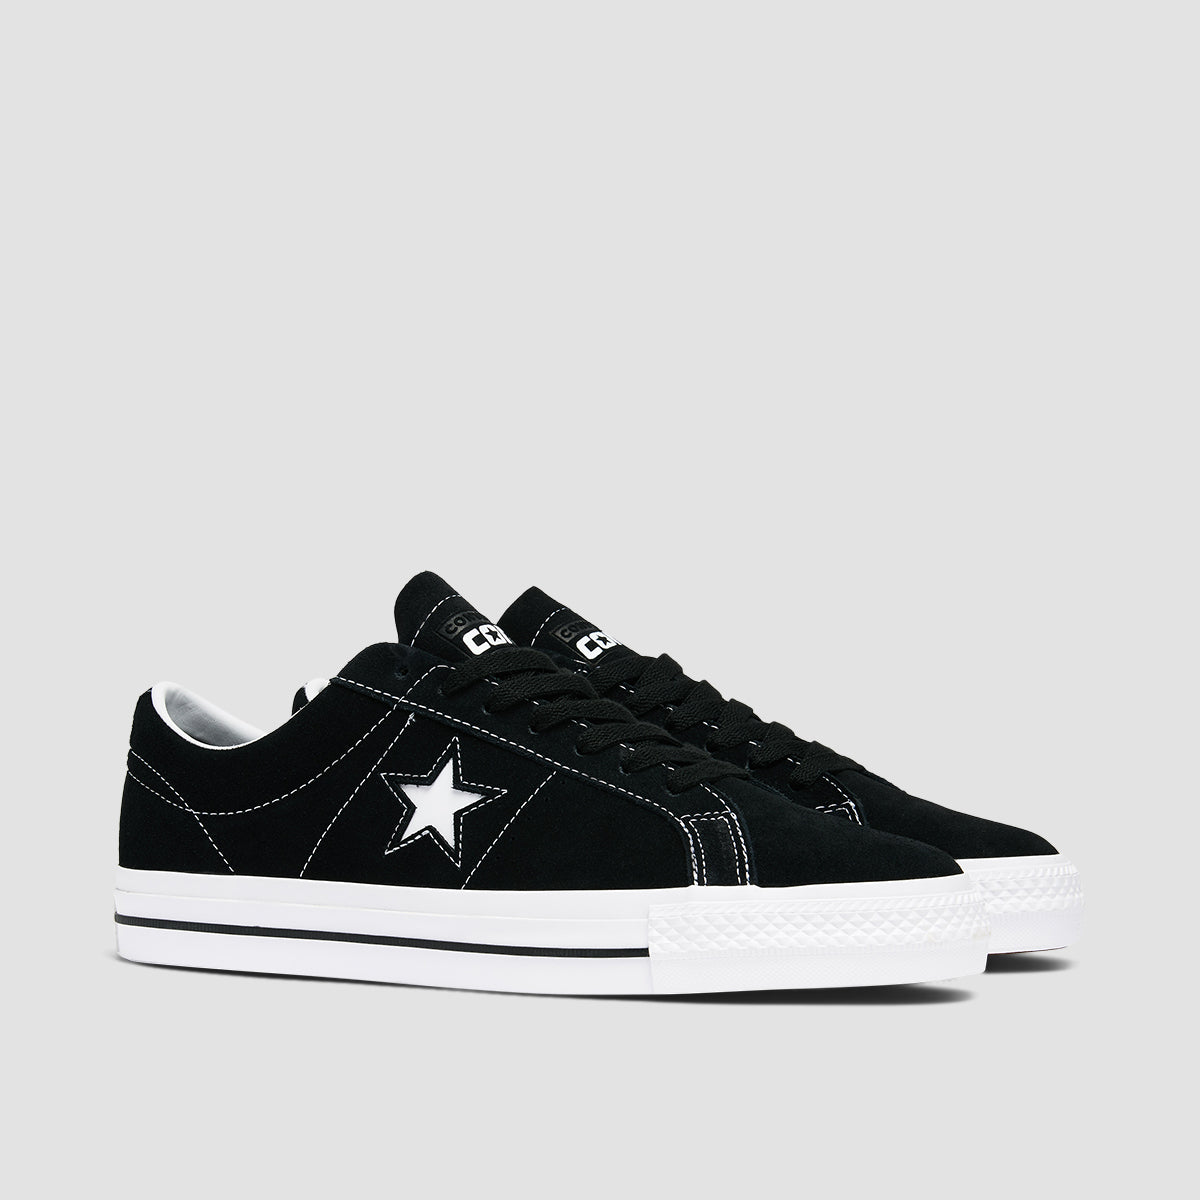 Converse One Star Pro Shoes - Black/Black/White